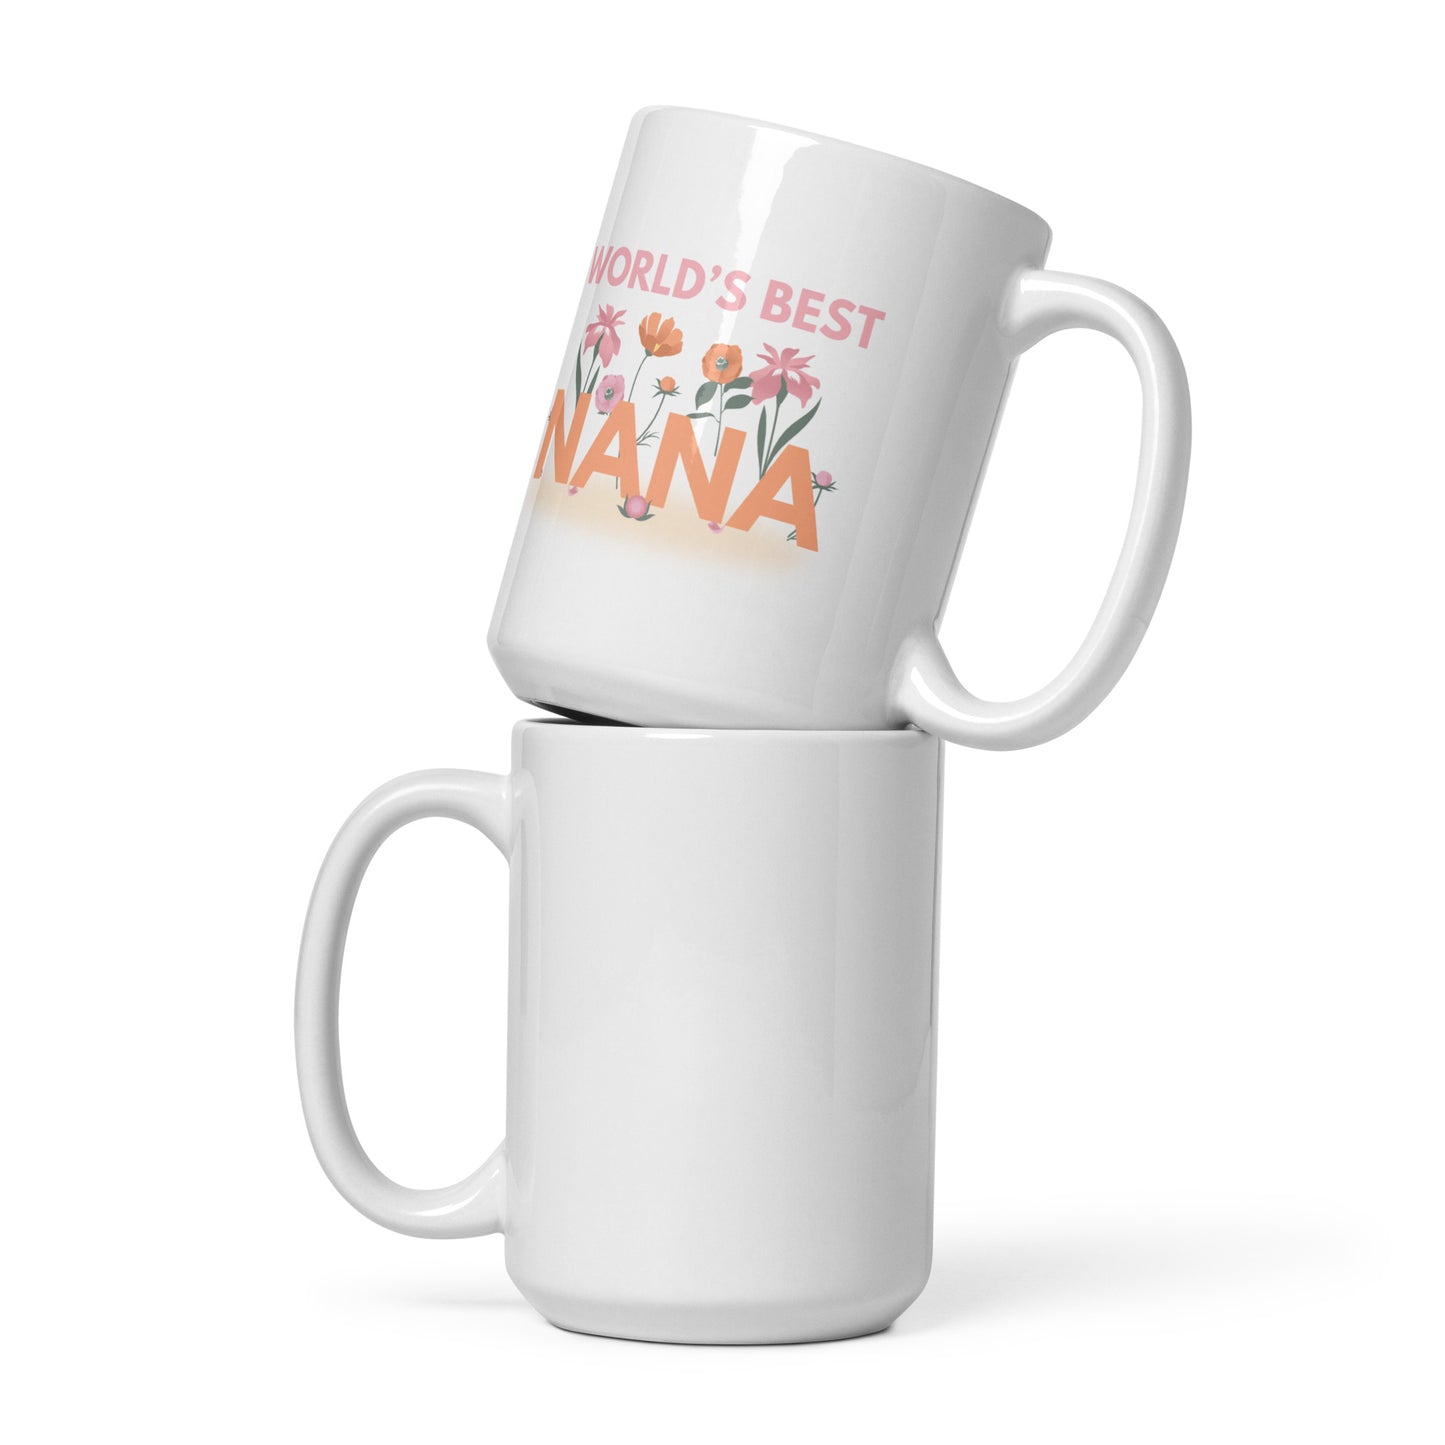 Worlds Best Nana - White glossy mug